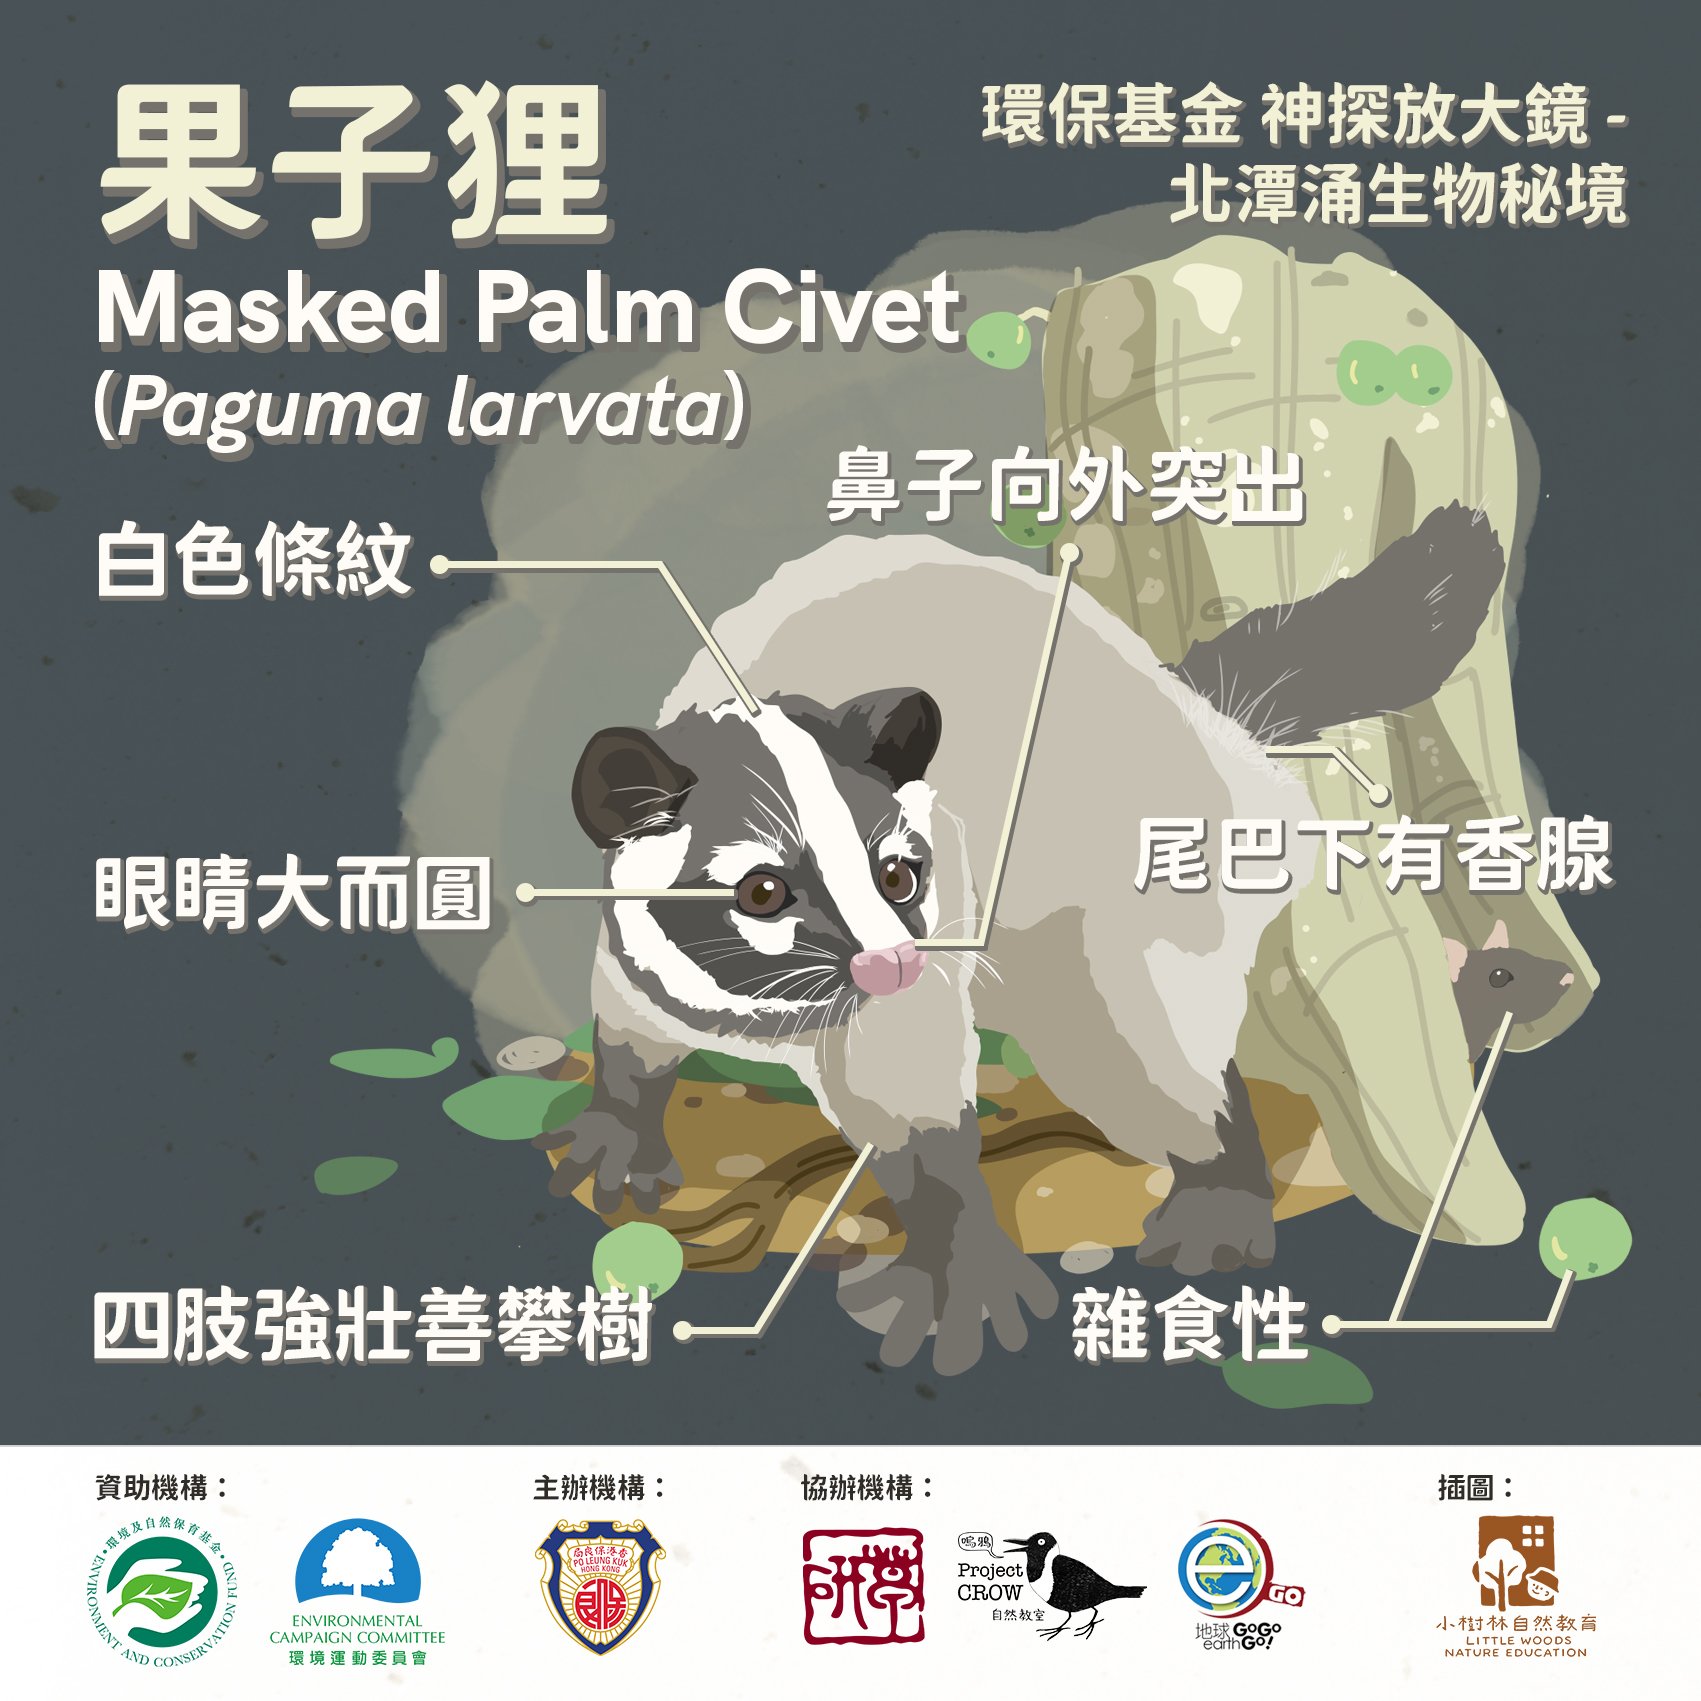 Masked Palm Civet